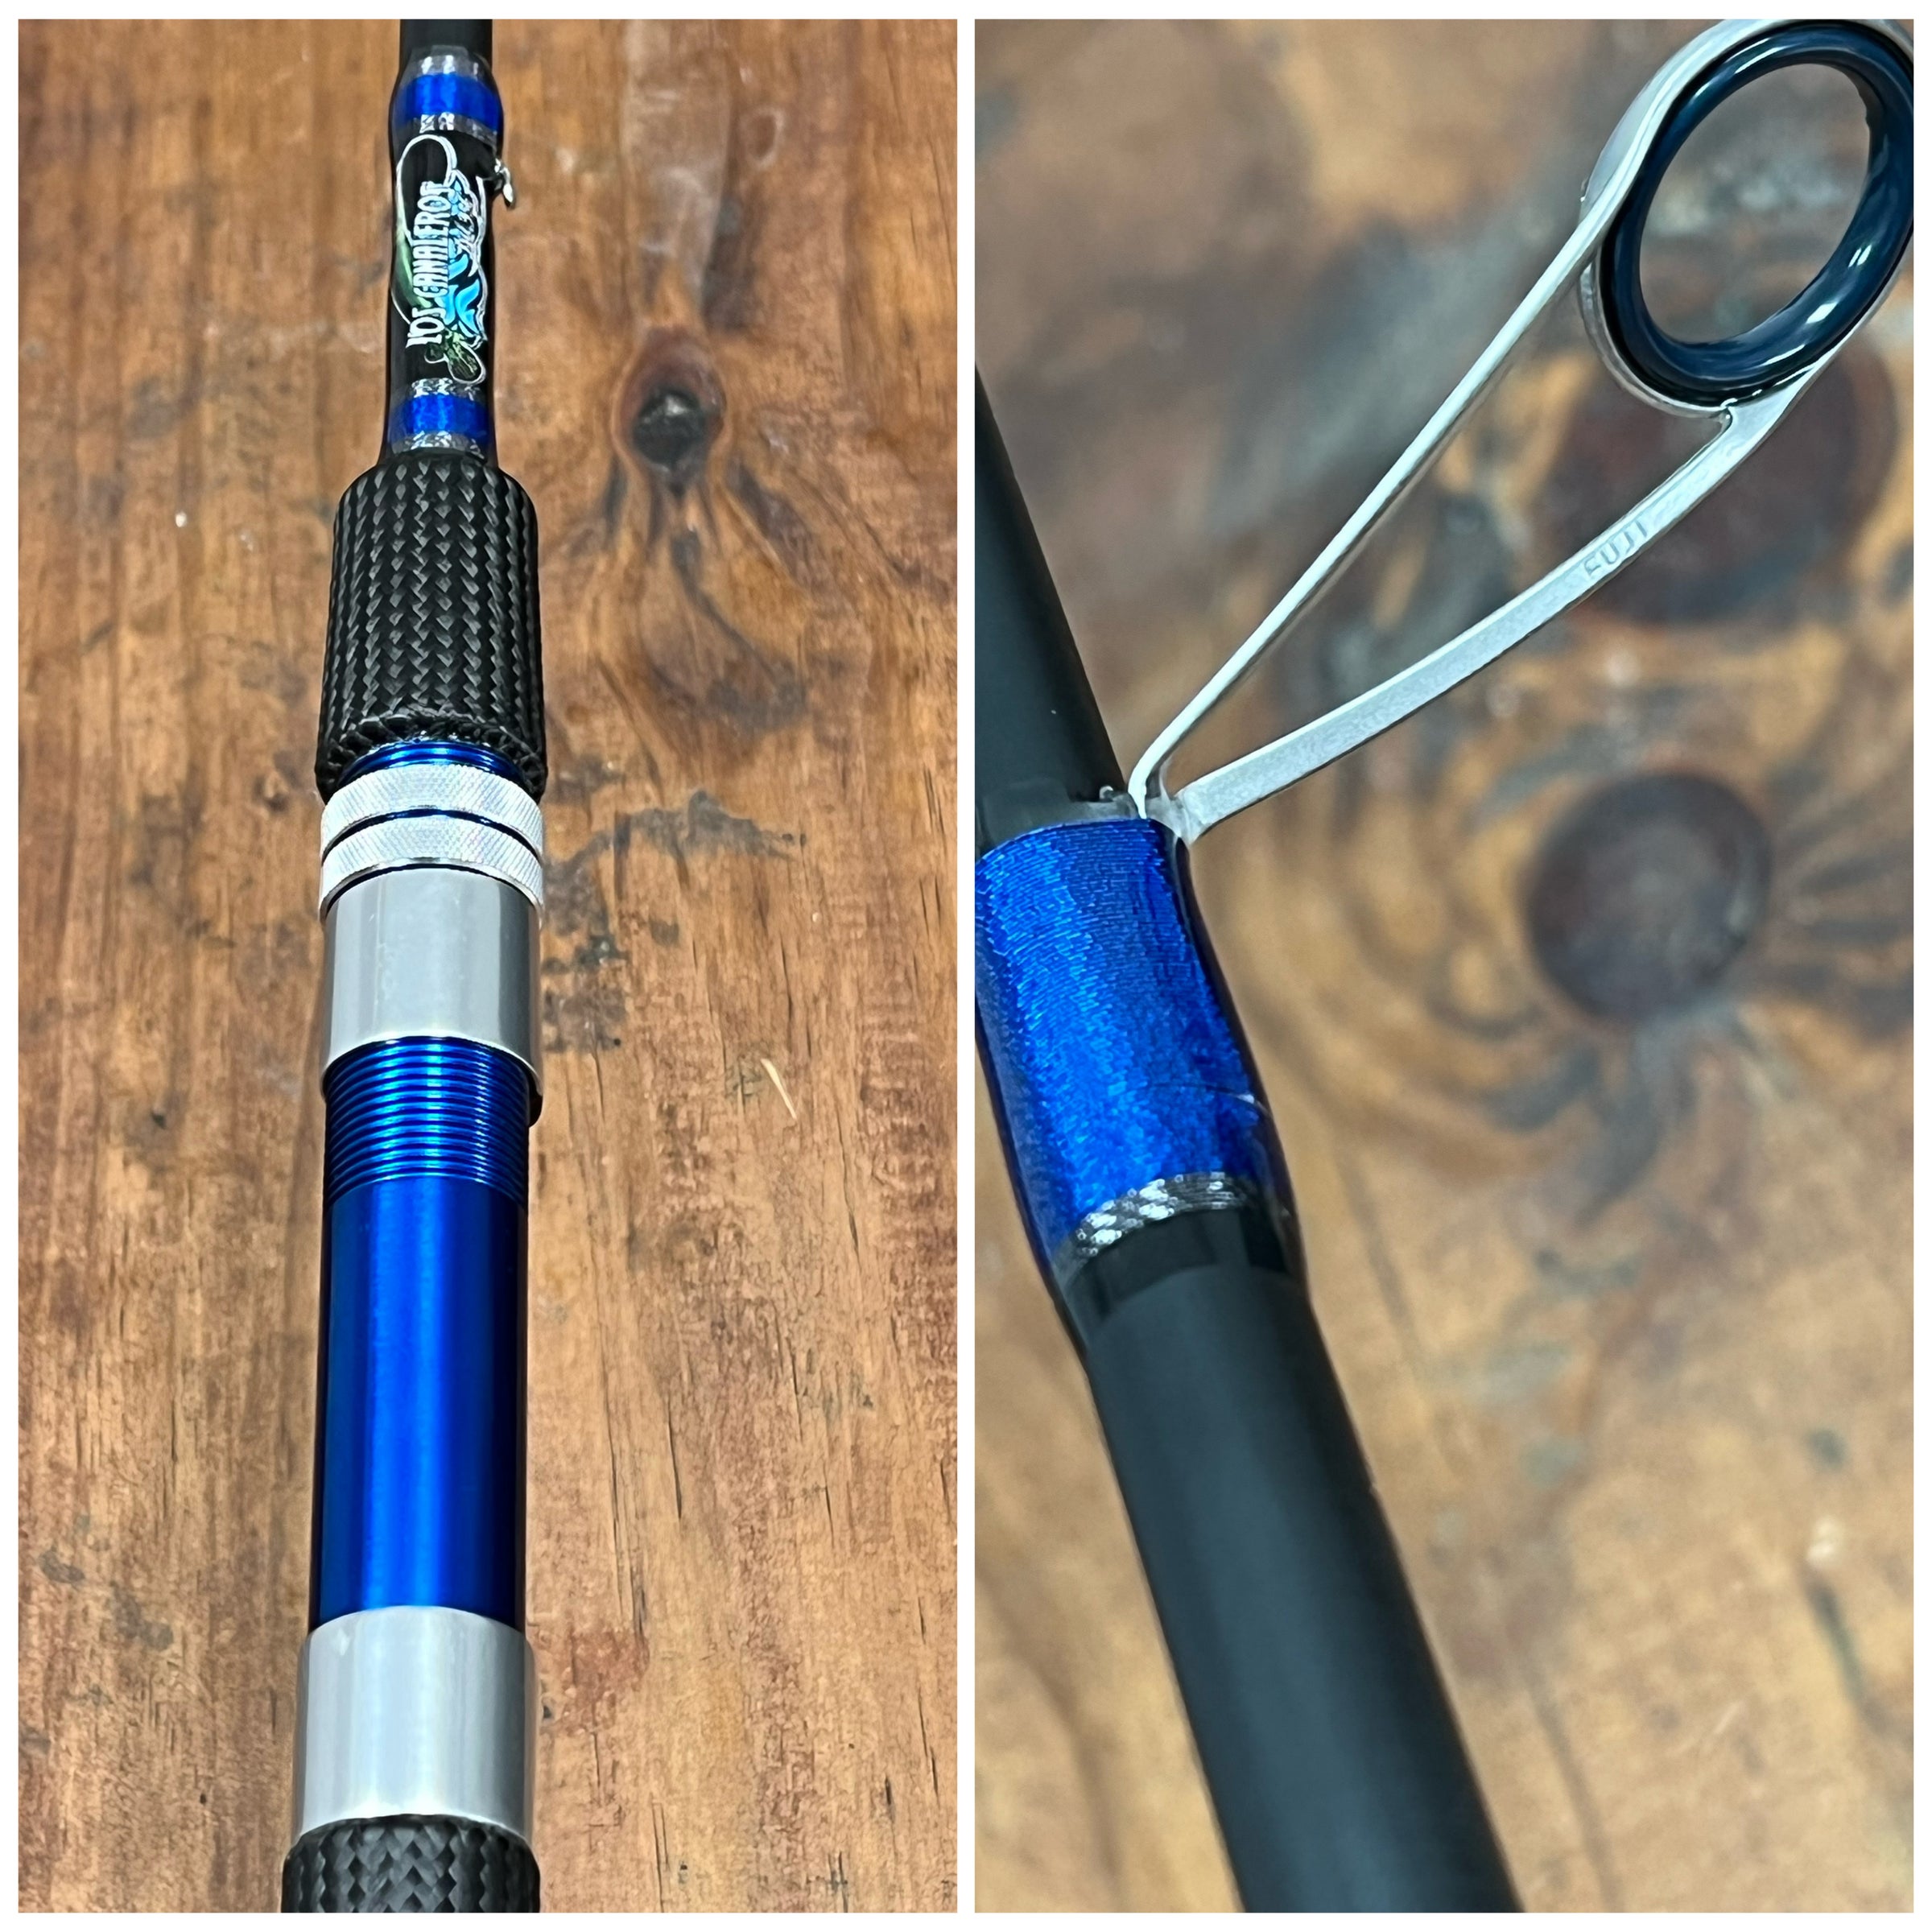 Custom Fishing Rods and Components - DLF CUSTOM FISHING RODS